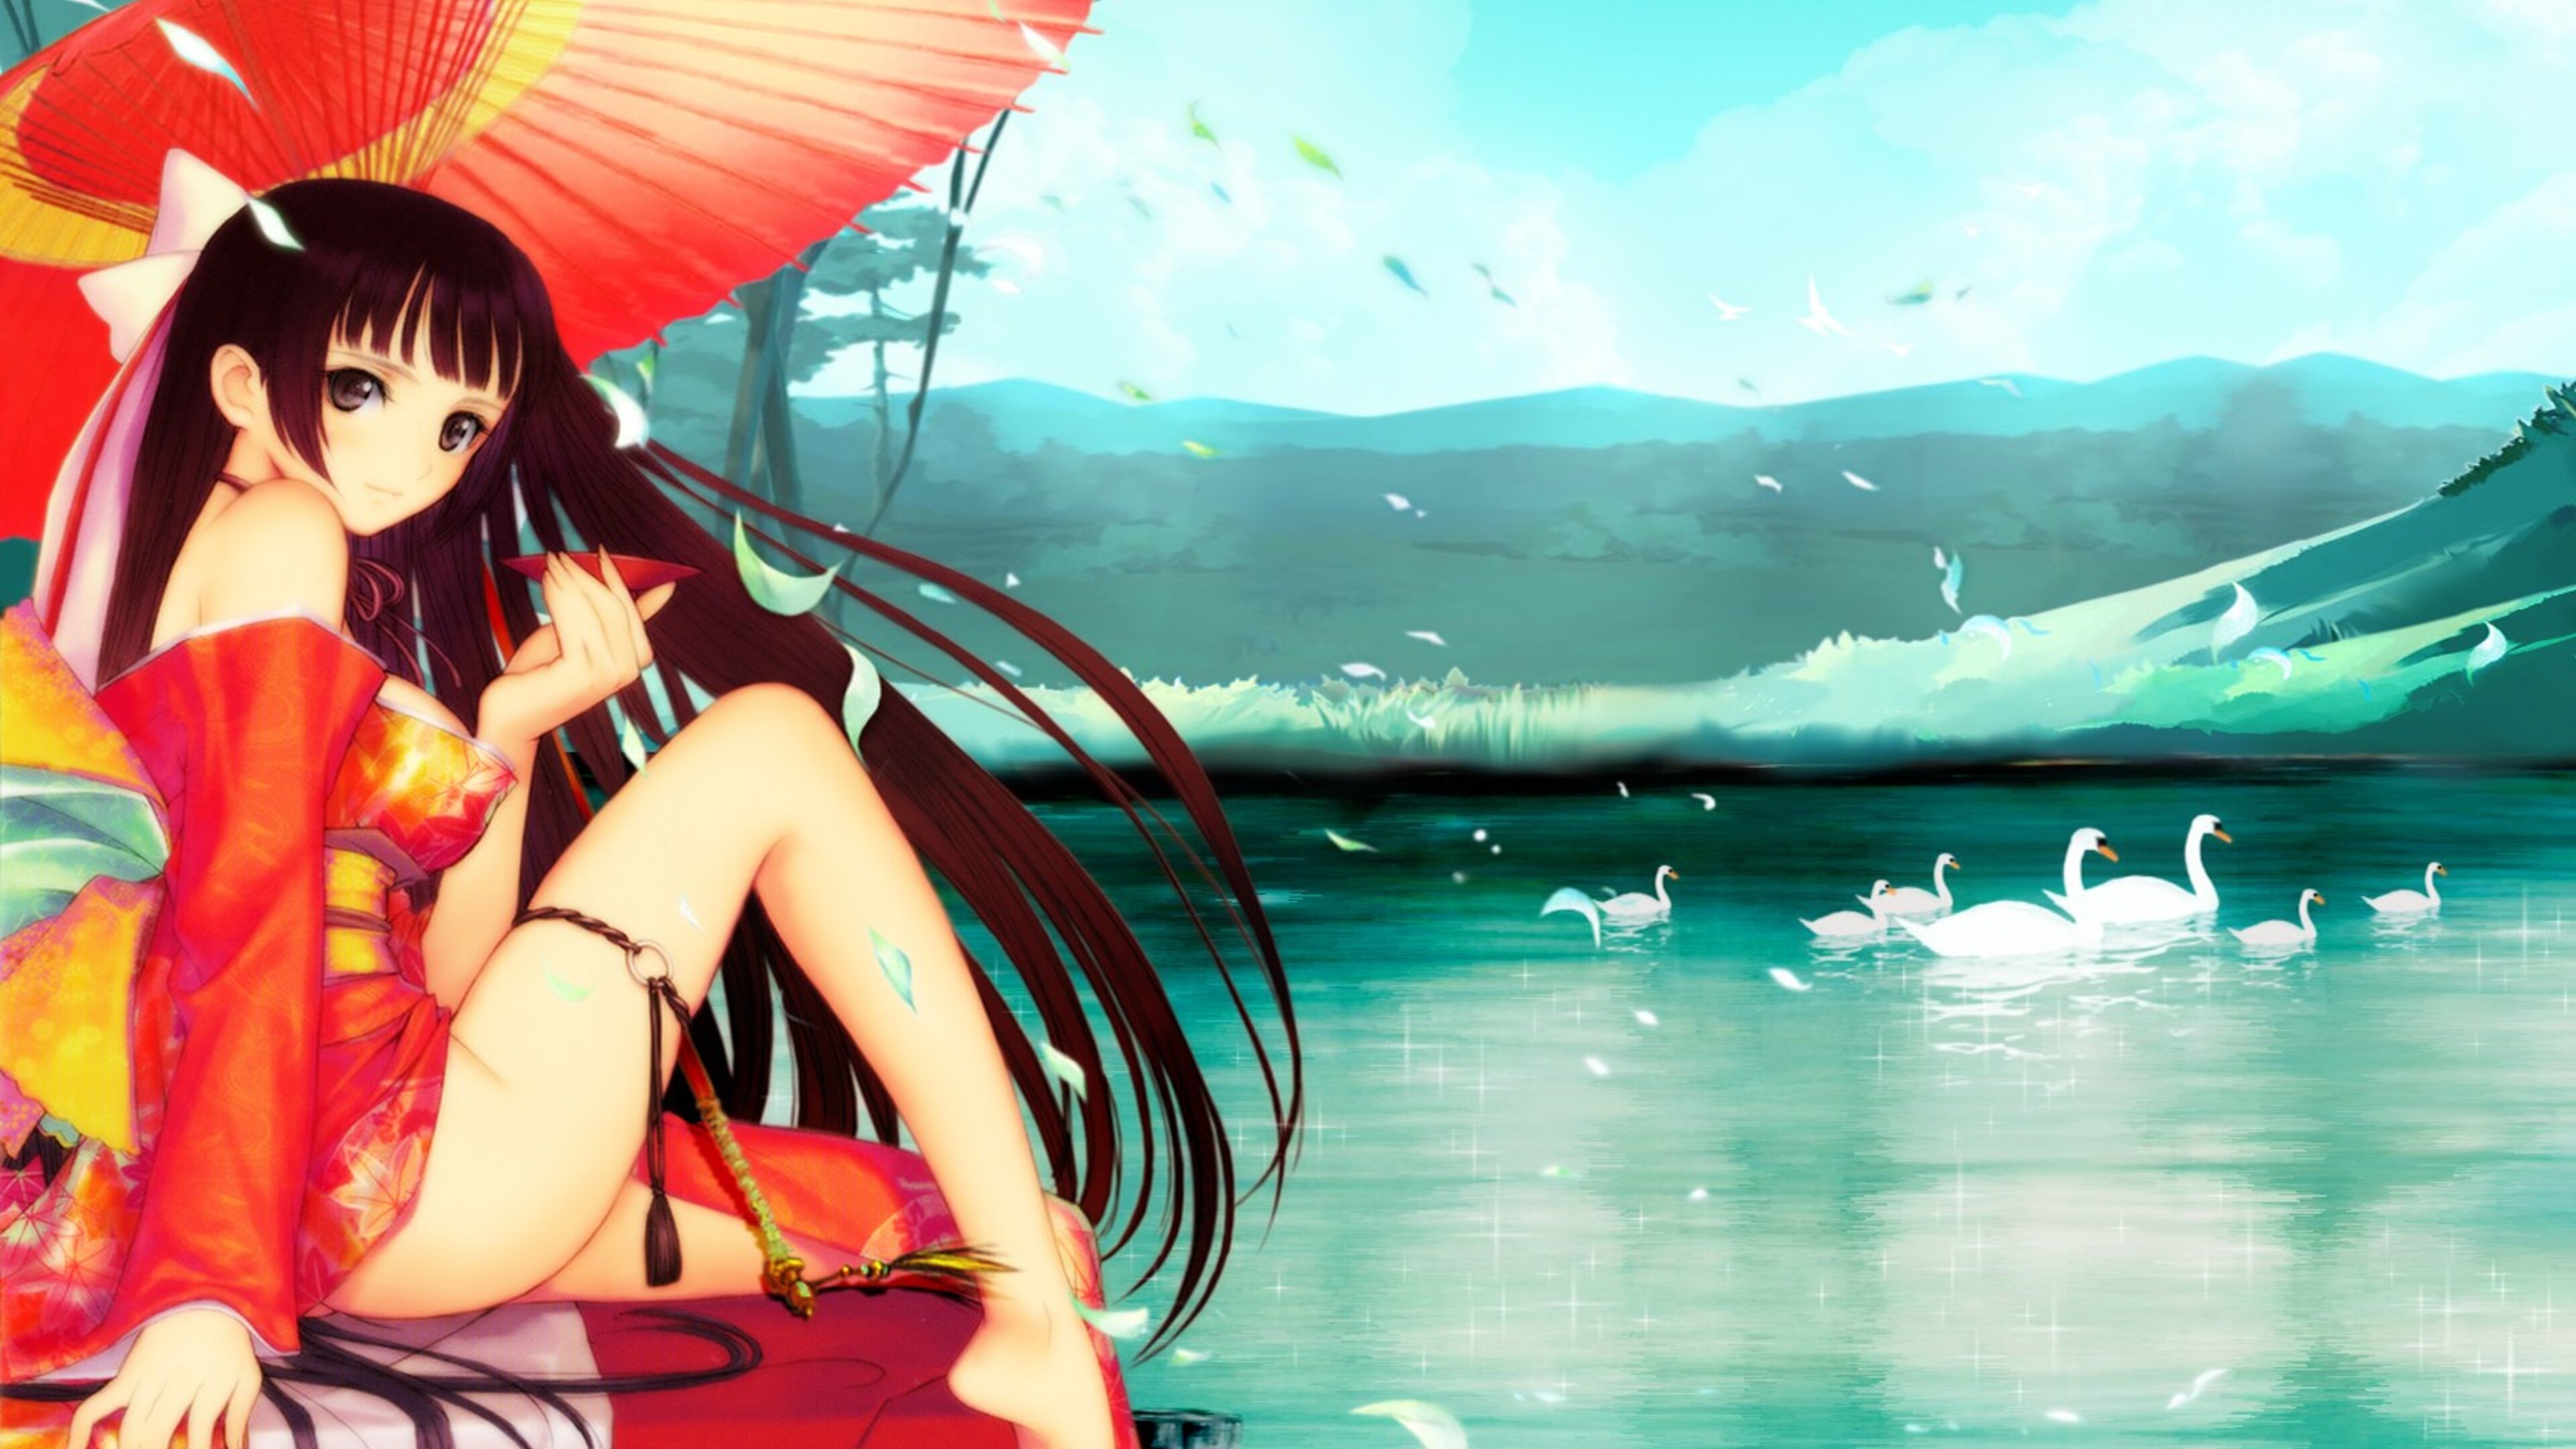 Download 8k Anime Girl And Dragon Wallpaper